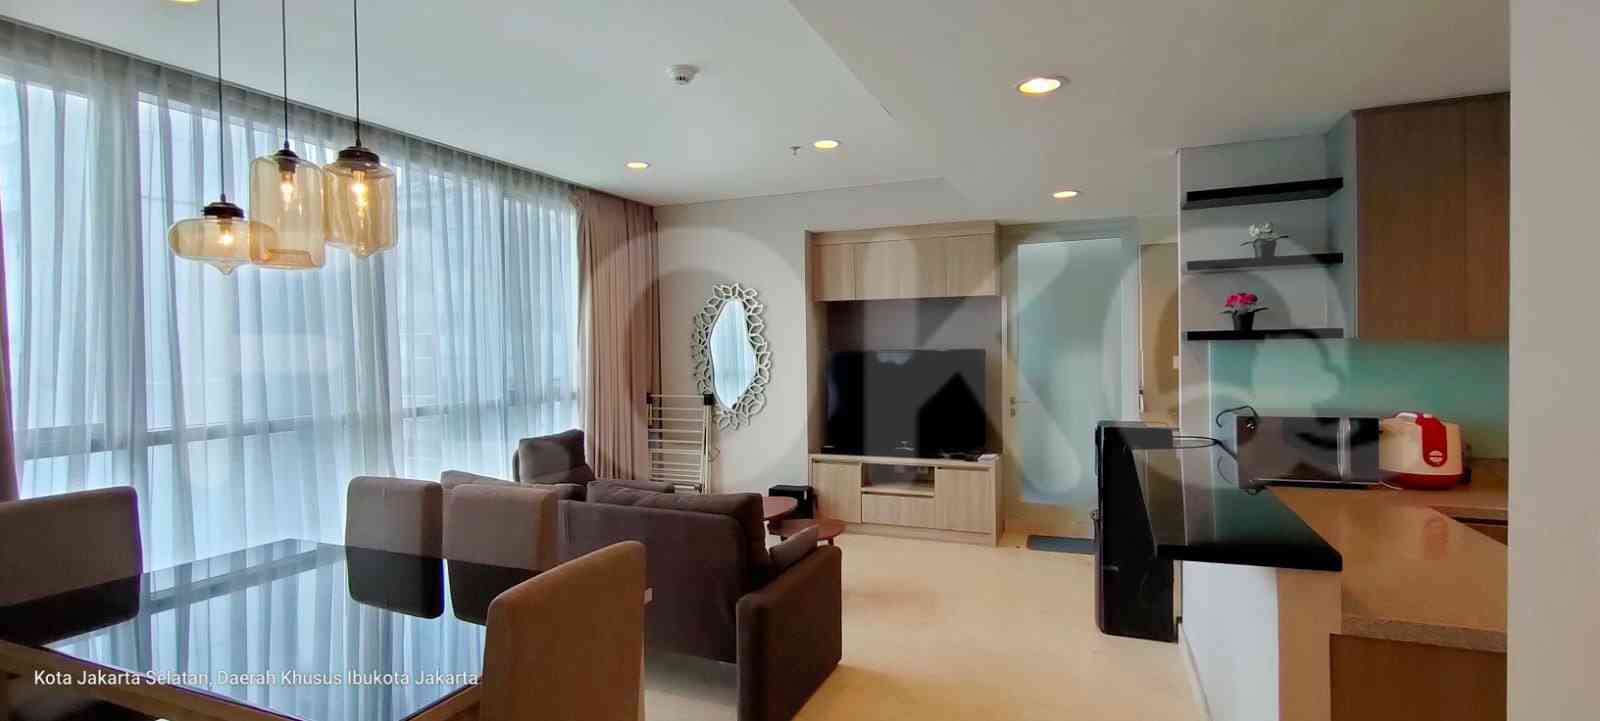 2 Bedroom on 23rd Floor for Rent in Ciputra World 2 Apartment - fkuce7 7